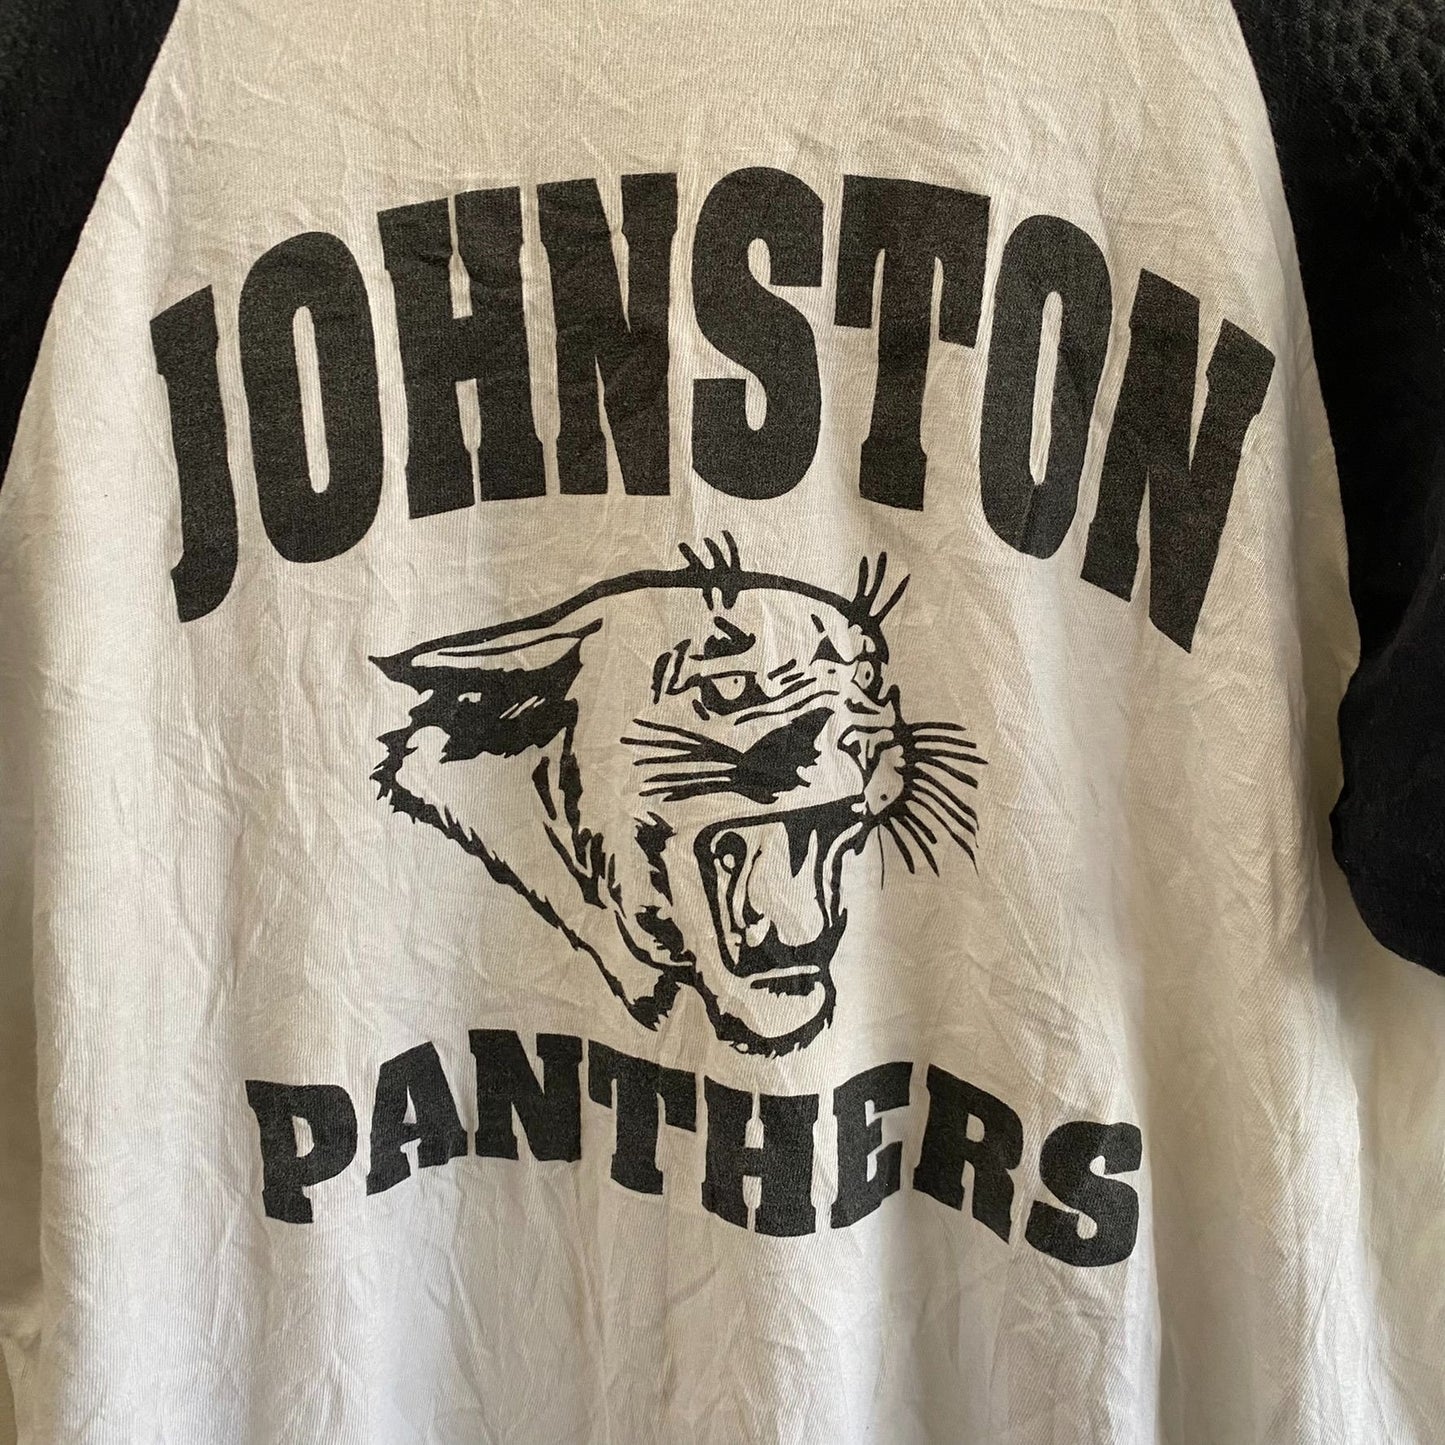 Vintage Johnston Panthers Football Ringer Tee